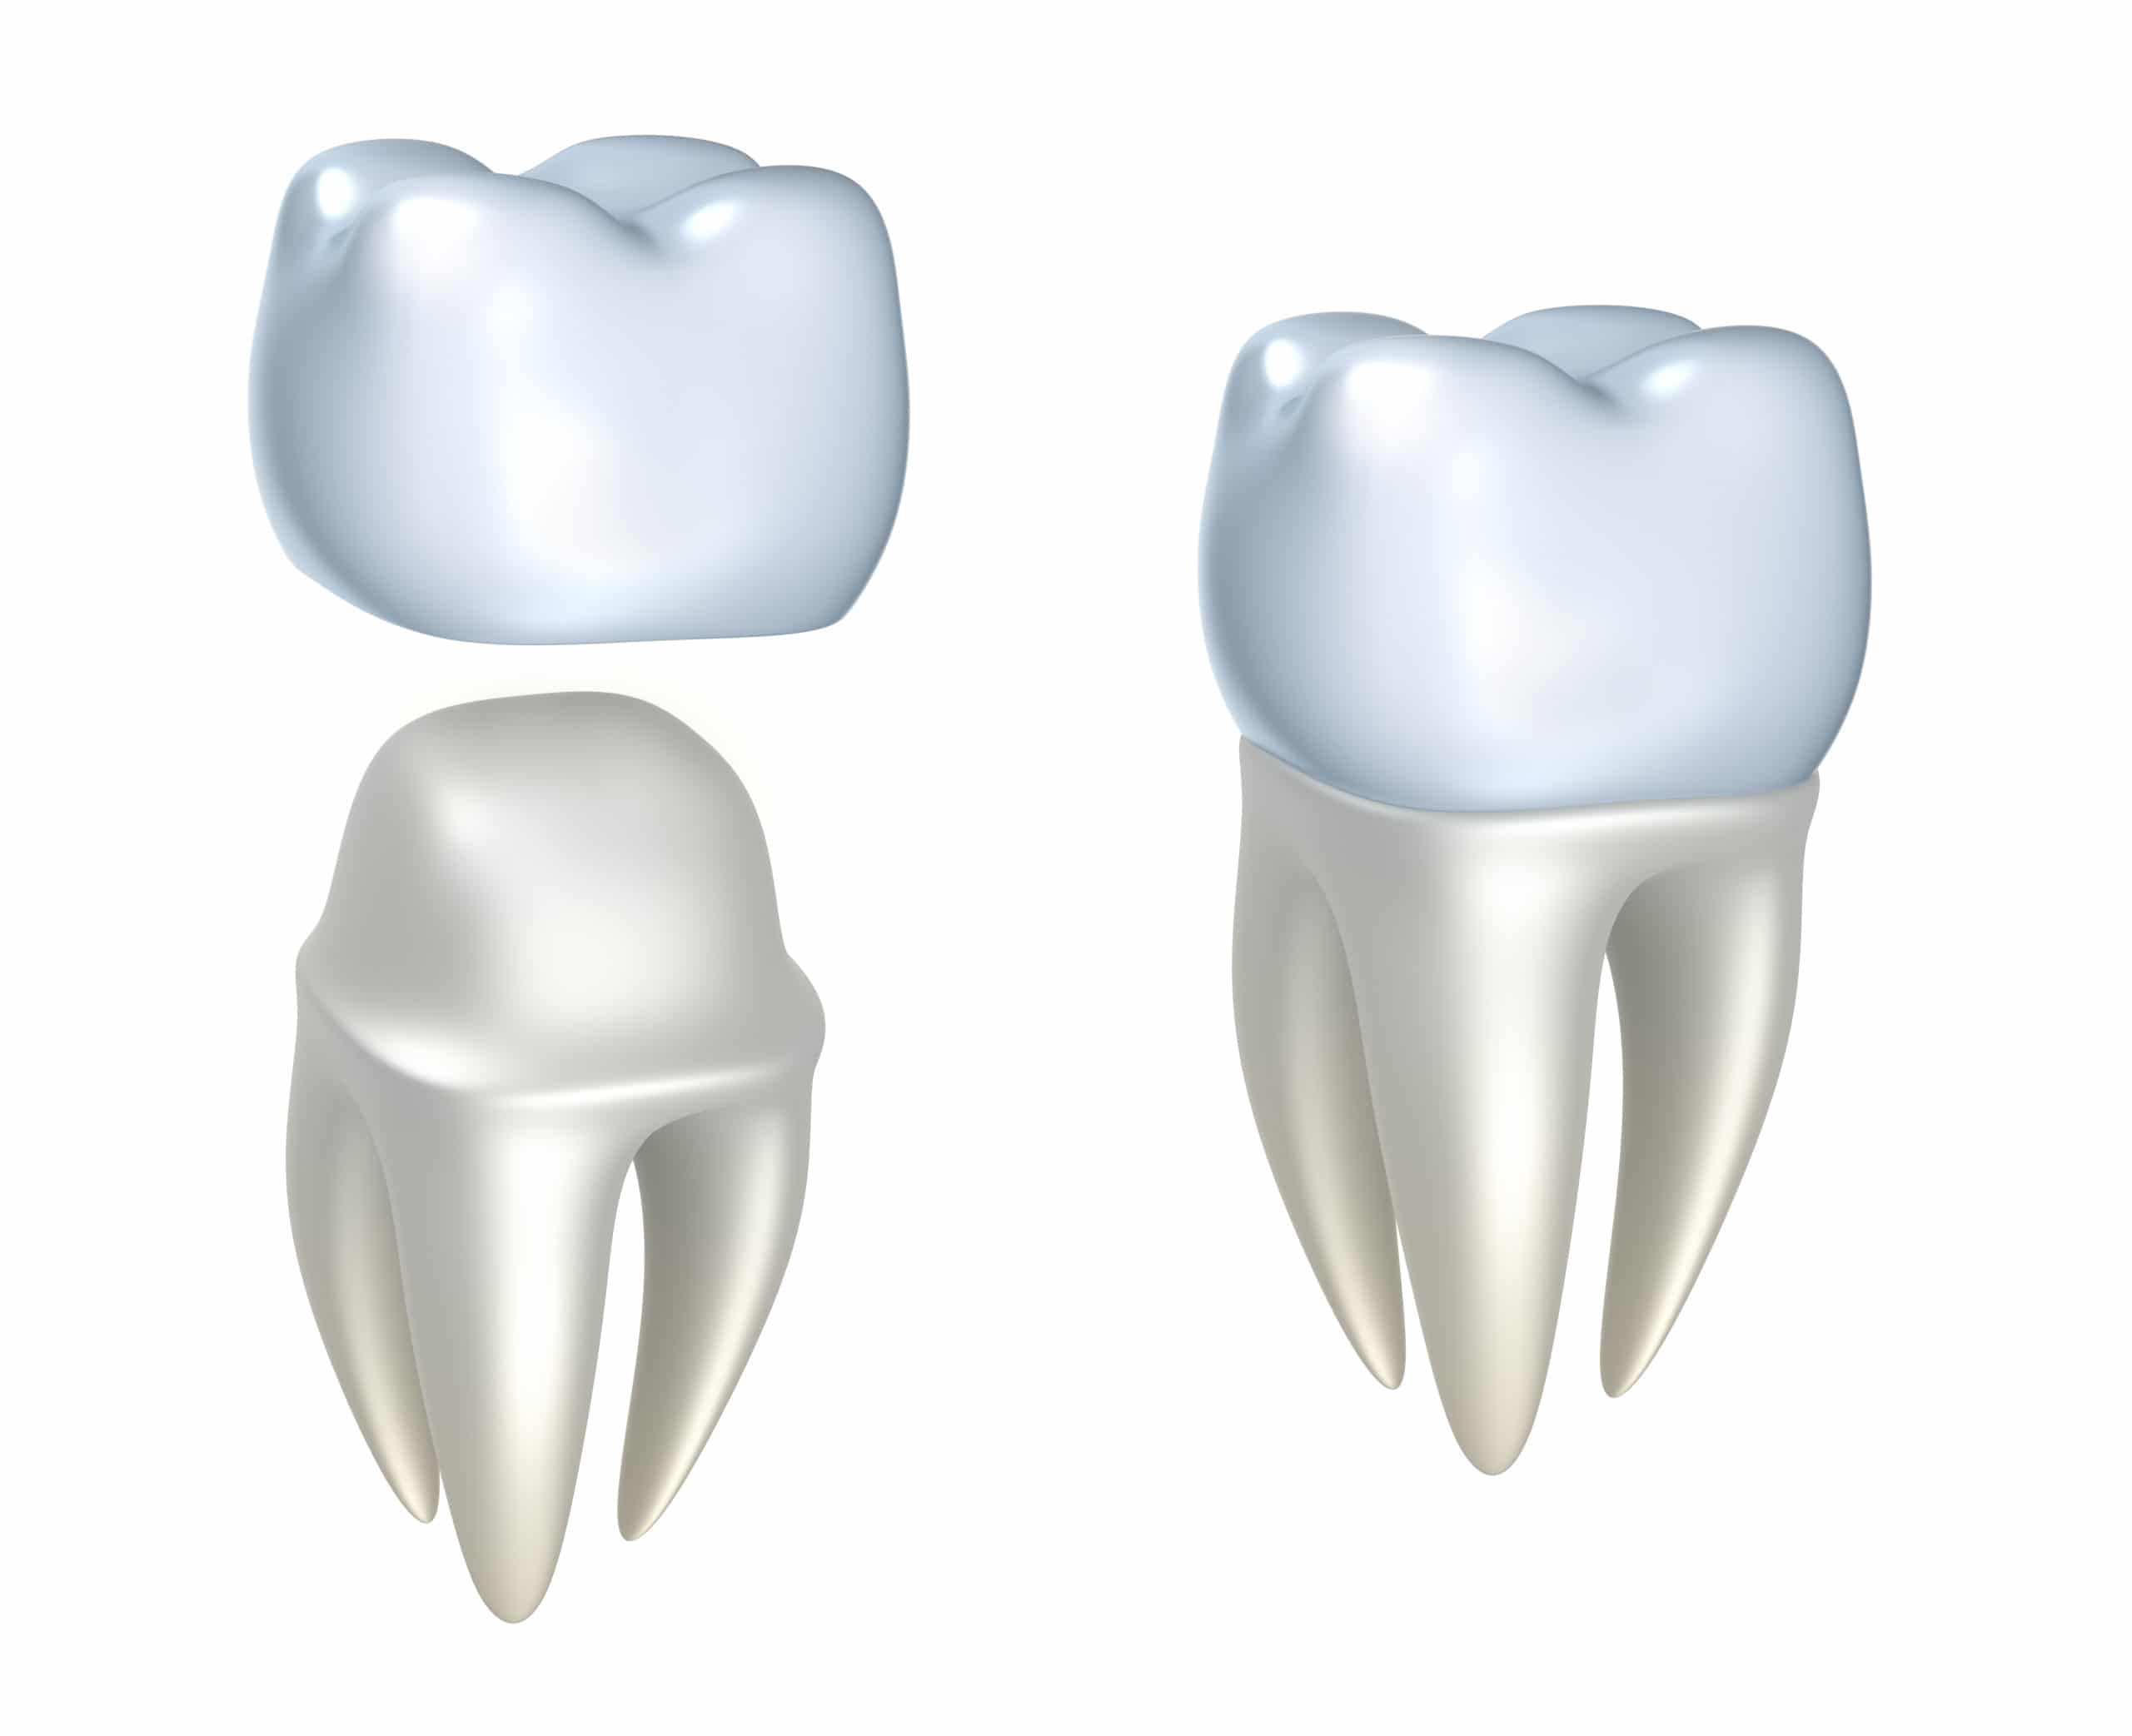 How Dental crowns work